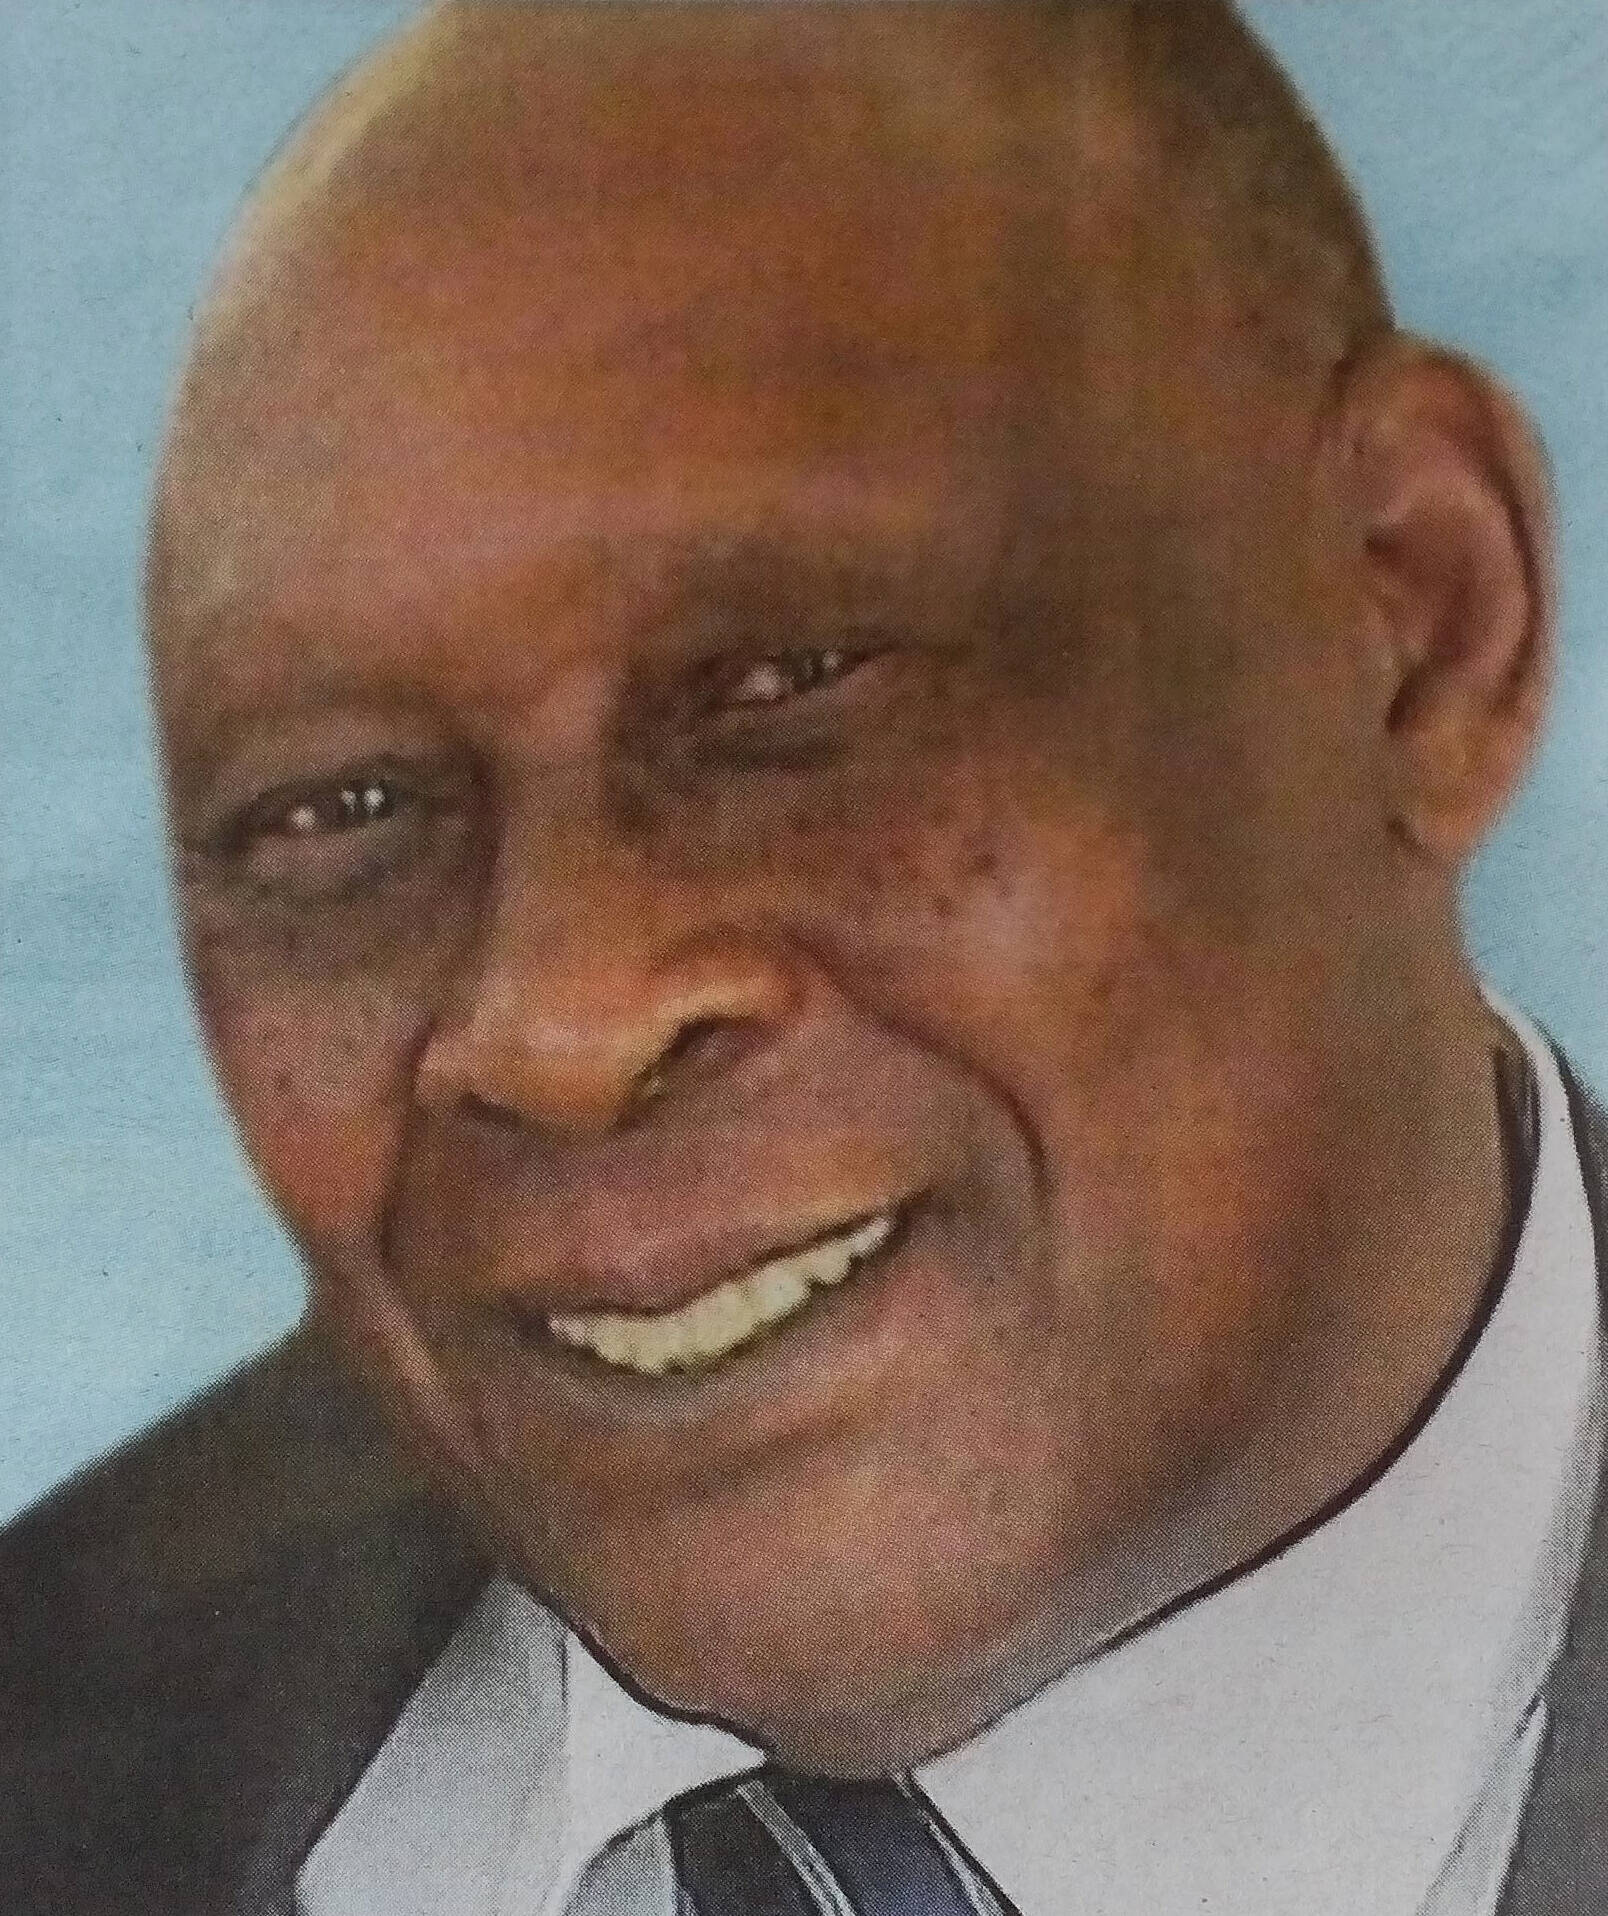 Obituary Image of William Gatuhi Murathe 15th january 1931-7th April 2017" A Good Man